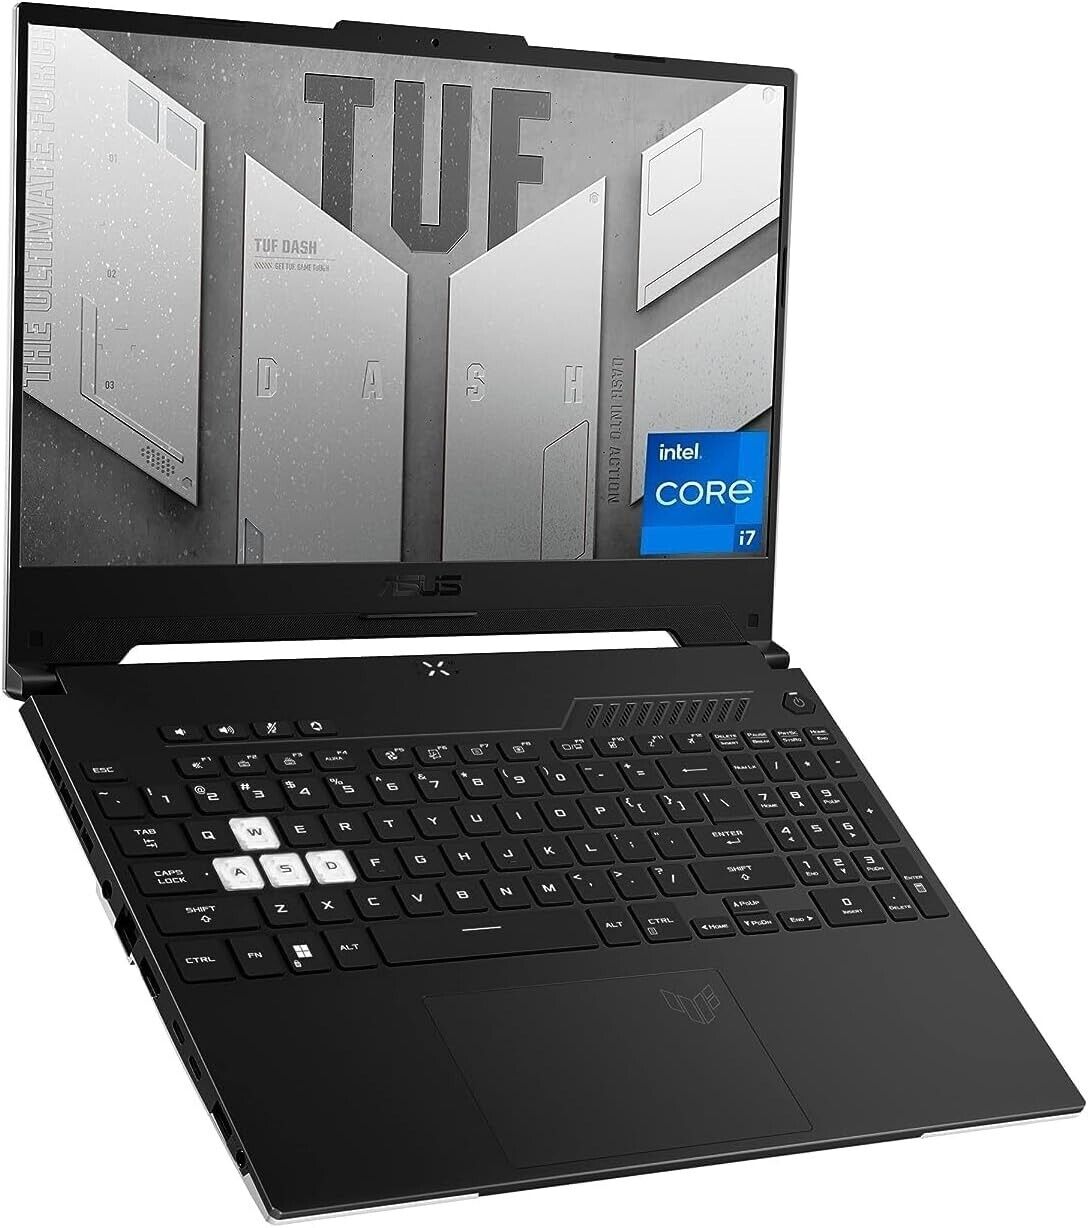 ASUS TUF Dash F15 Gaming Laptop (Core i7 12650H/16GB D5/RTX 3060/512GB/144Hz/FHD